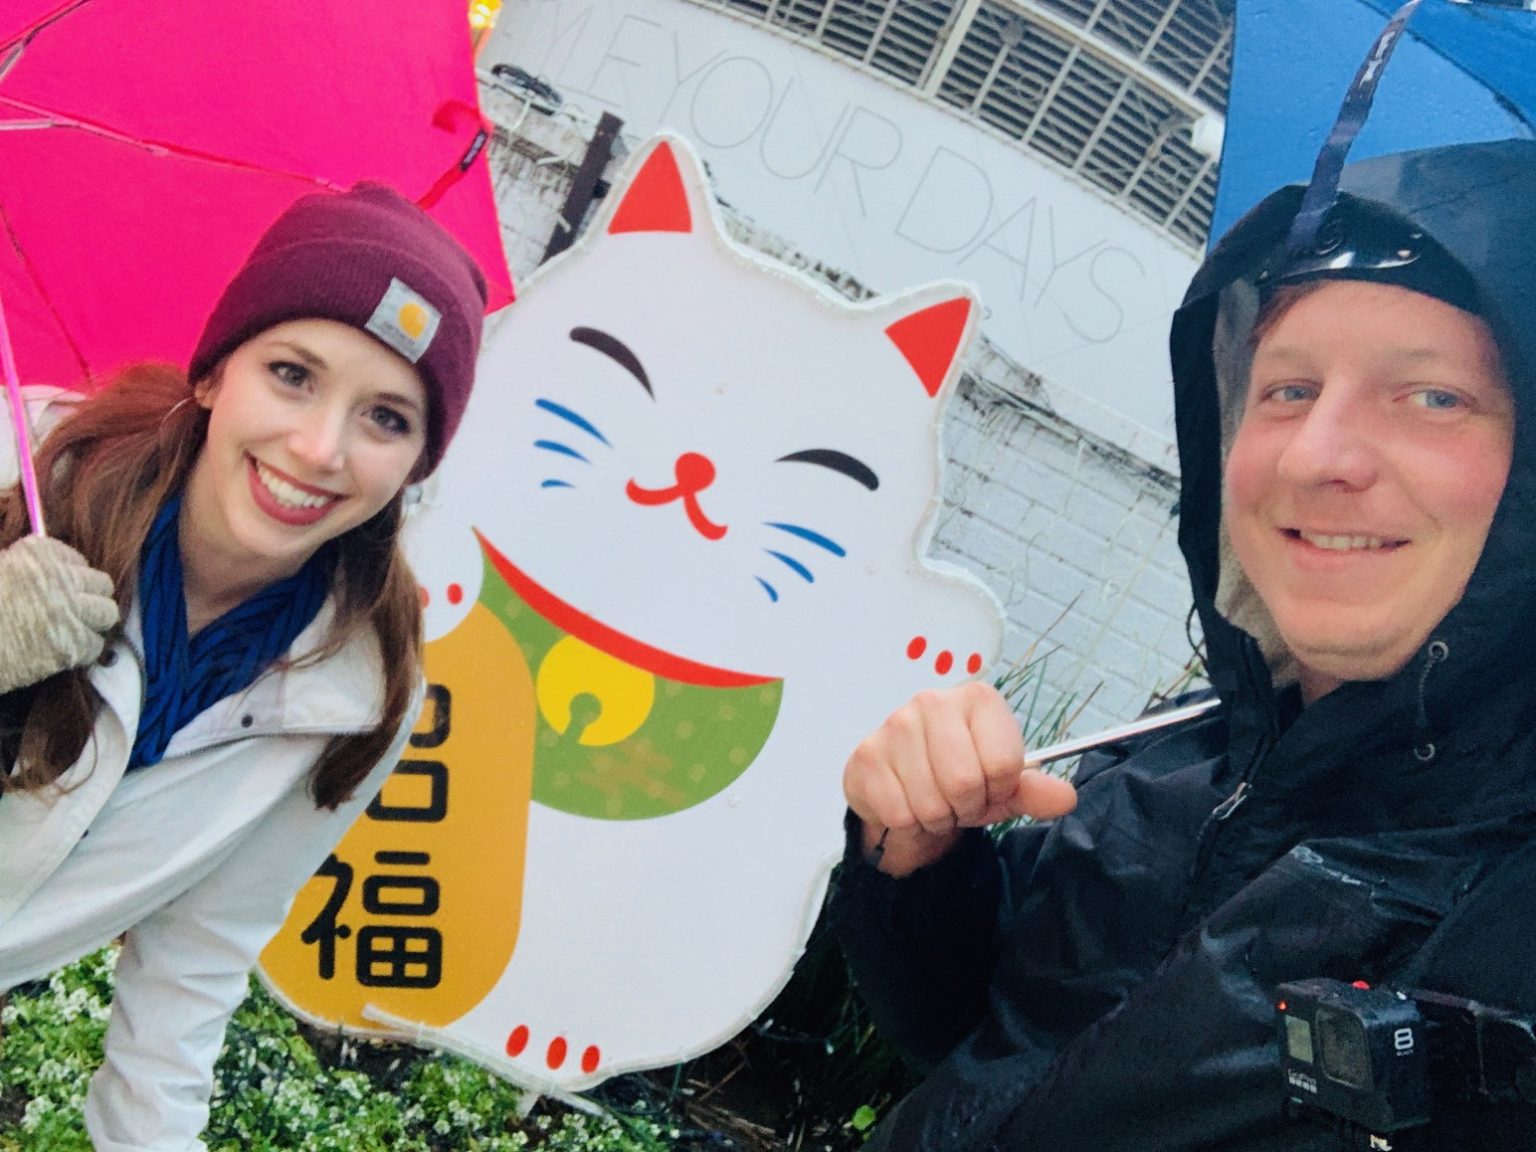 Maneki-neko cats are good luck charms in Japan